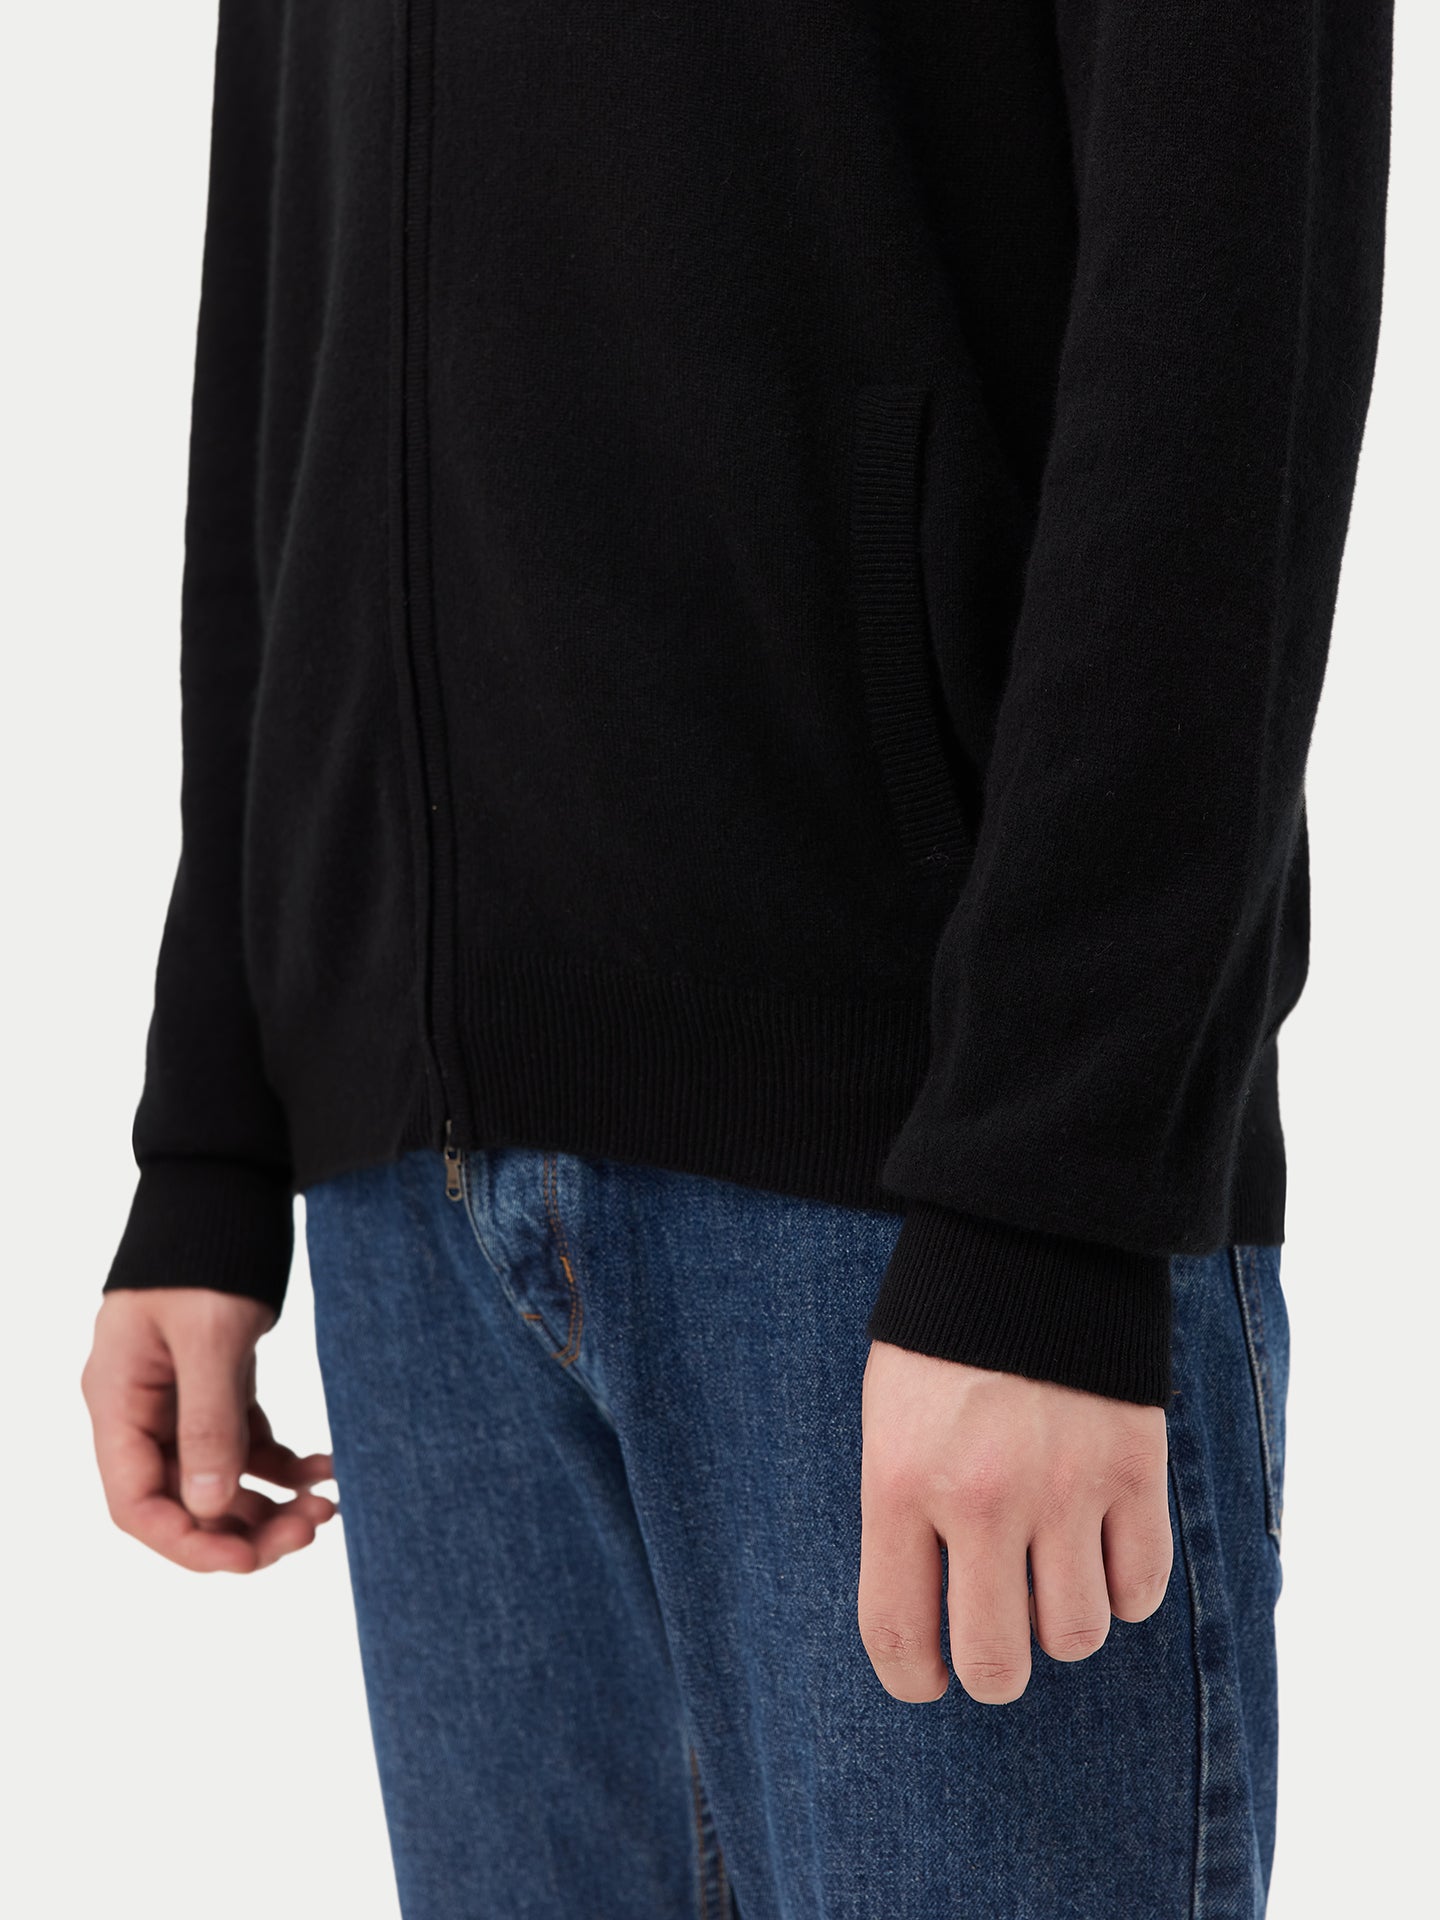 Men's Cashmere Full-Zip Cardigan Black - Gobi Cashmere